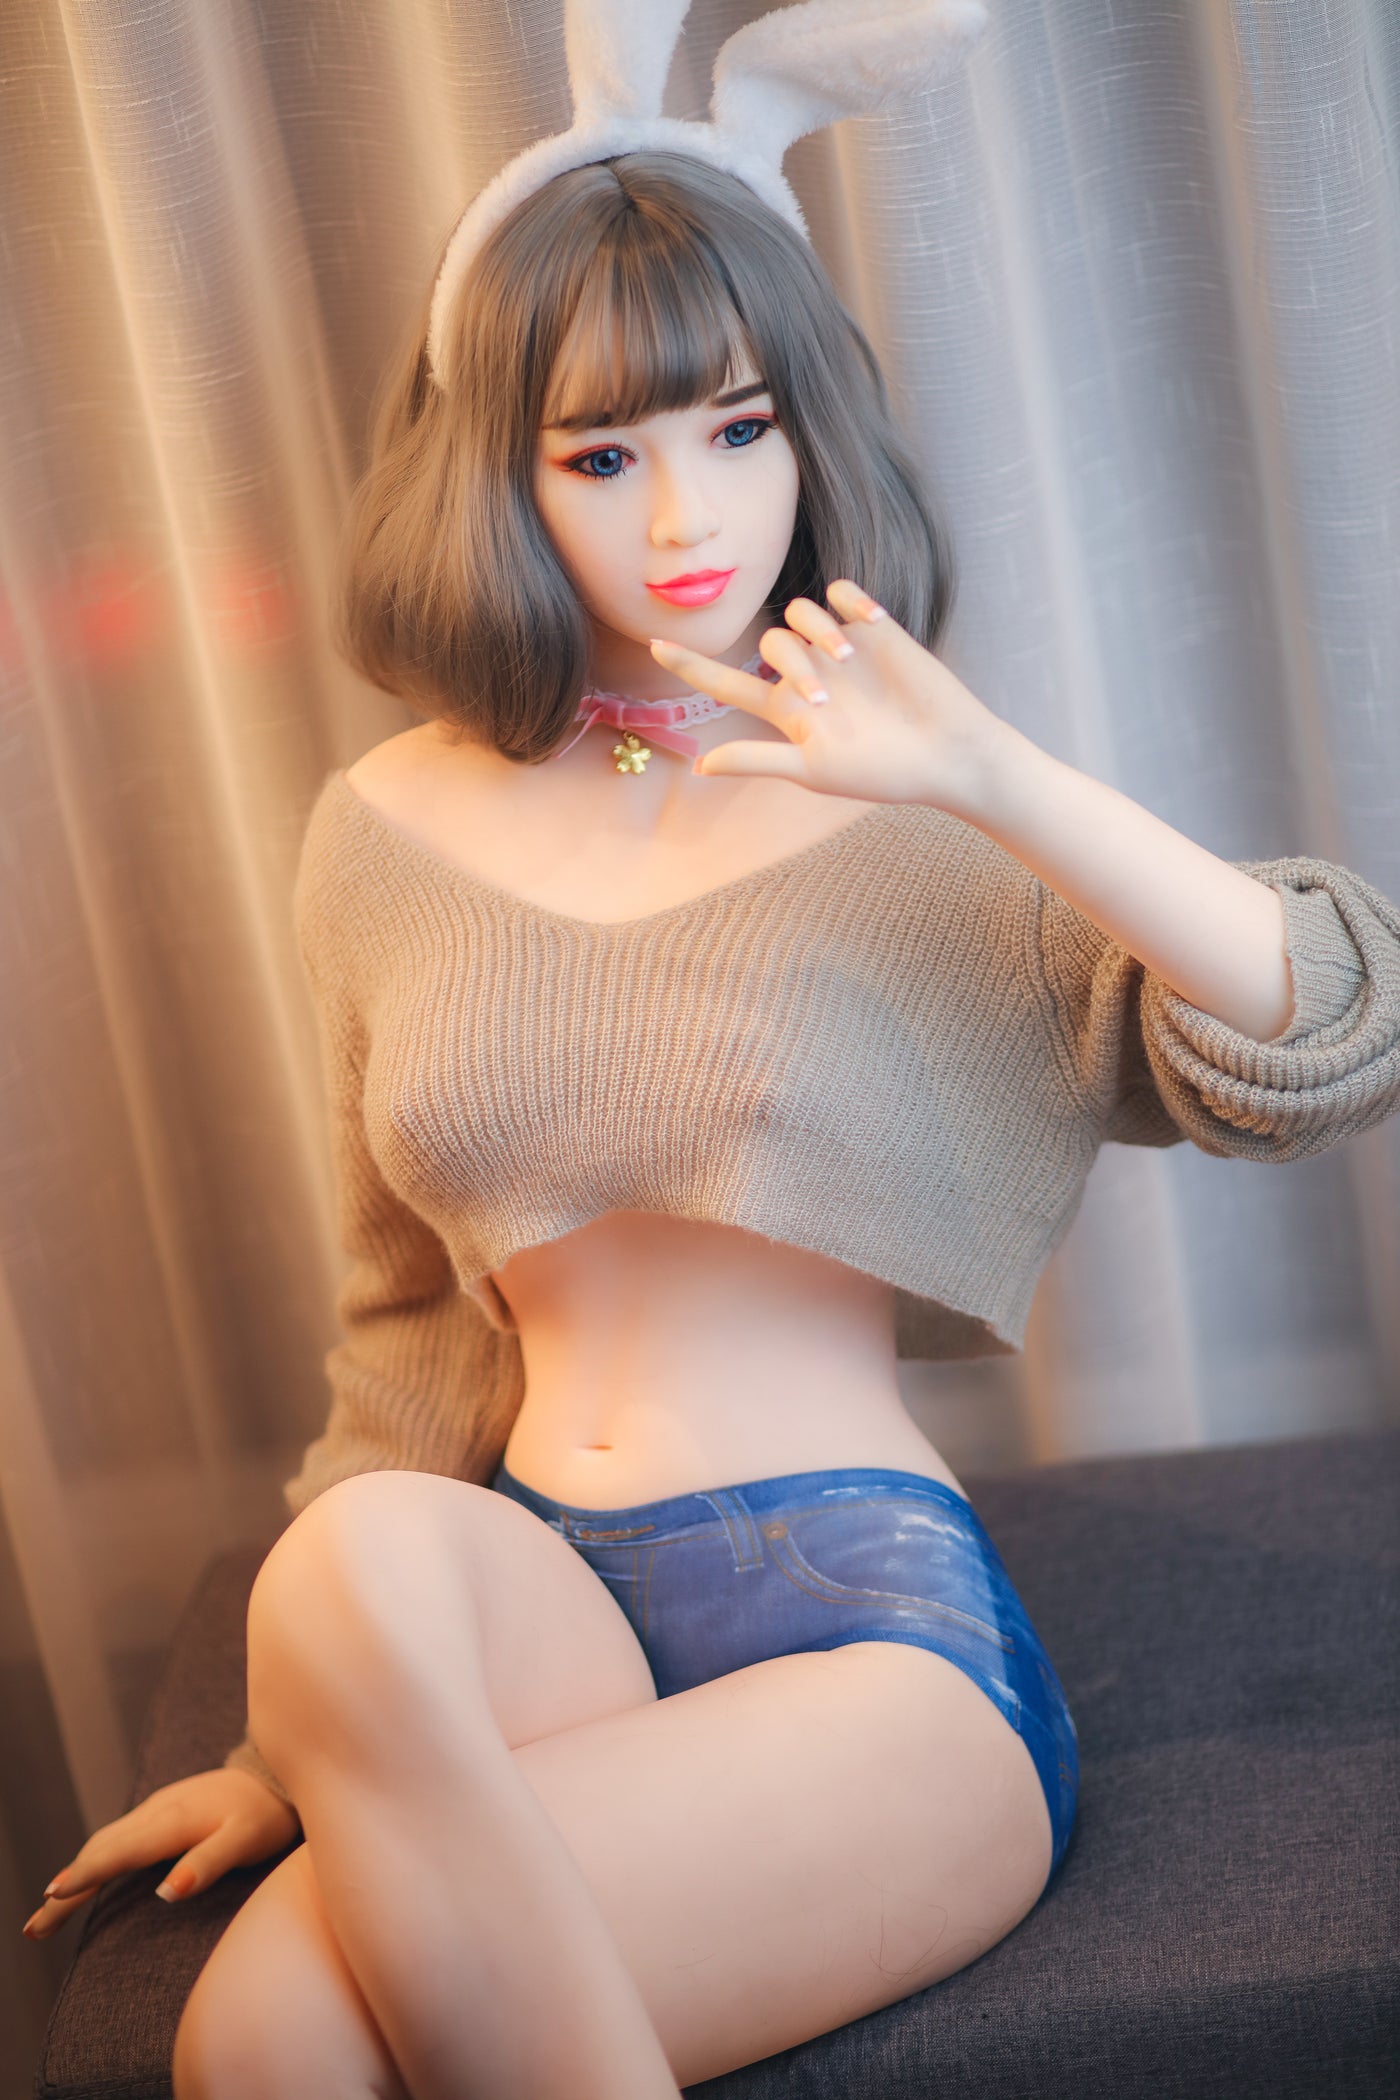 Neodoll Sugar Babe - Aitana - Realistic Sex Doll - Gel Breast - Uterus - 170cm - White